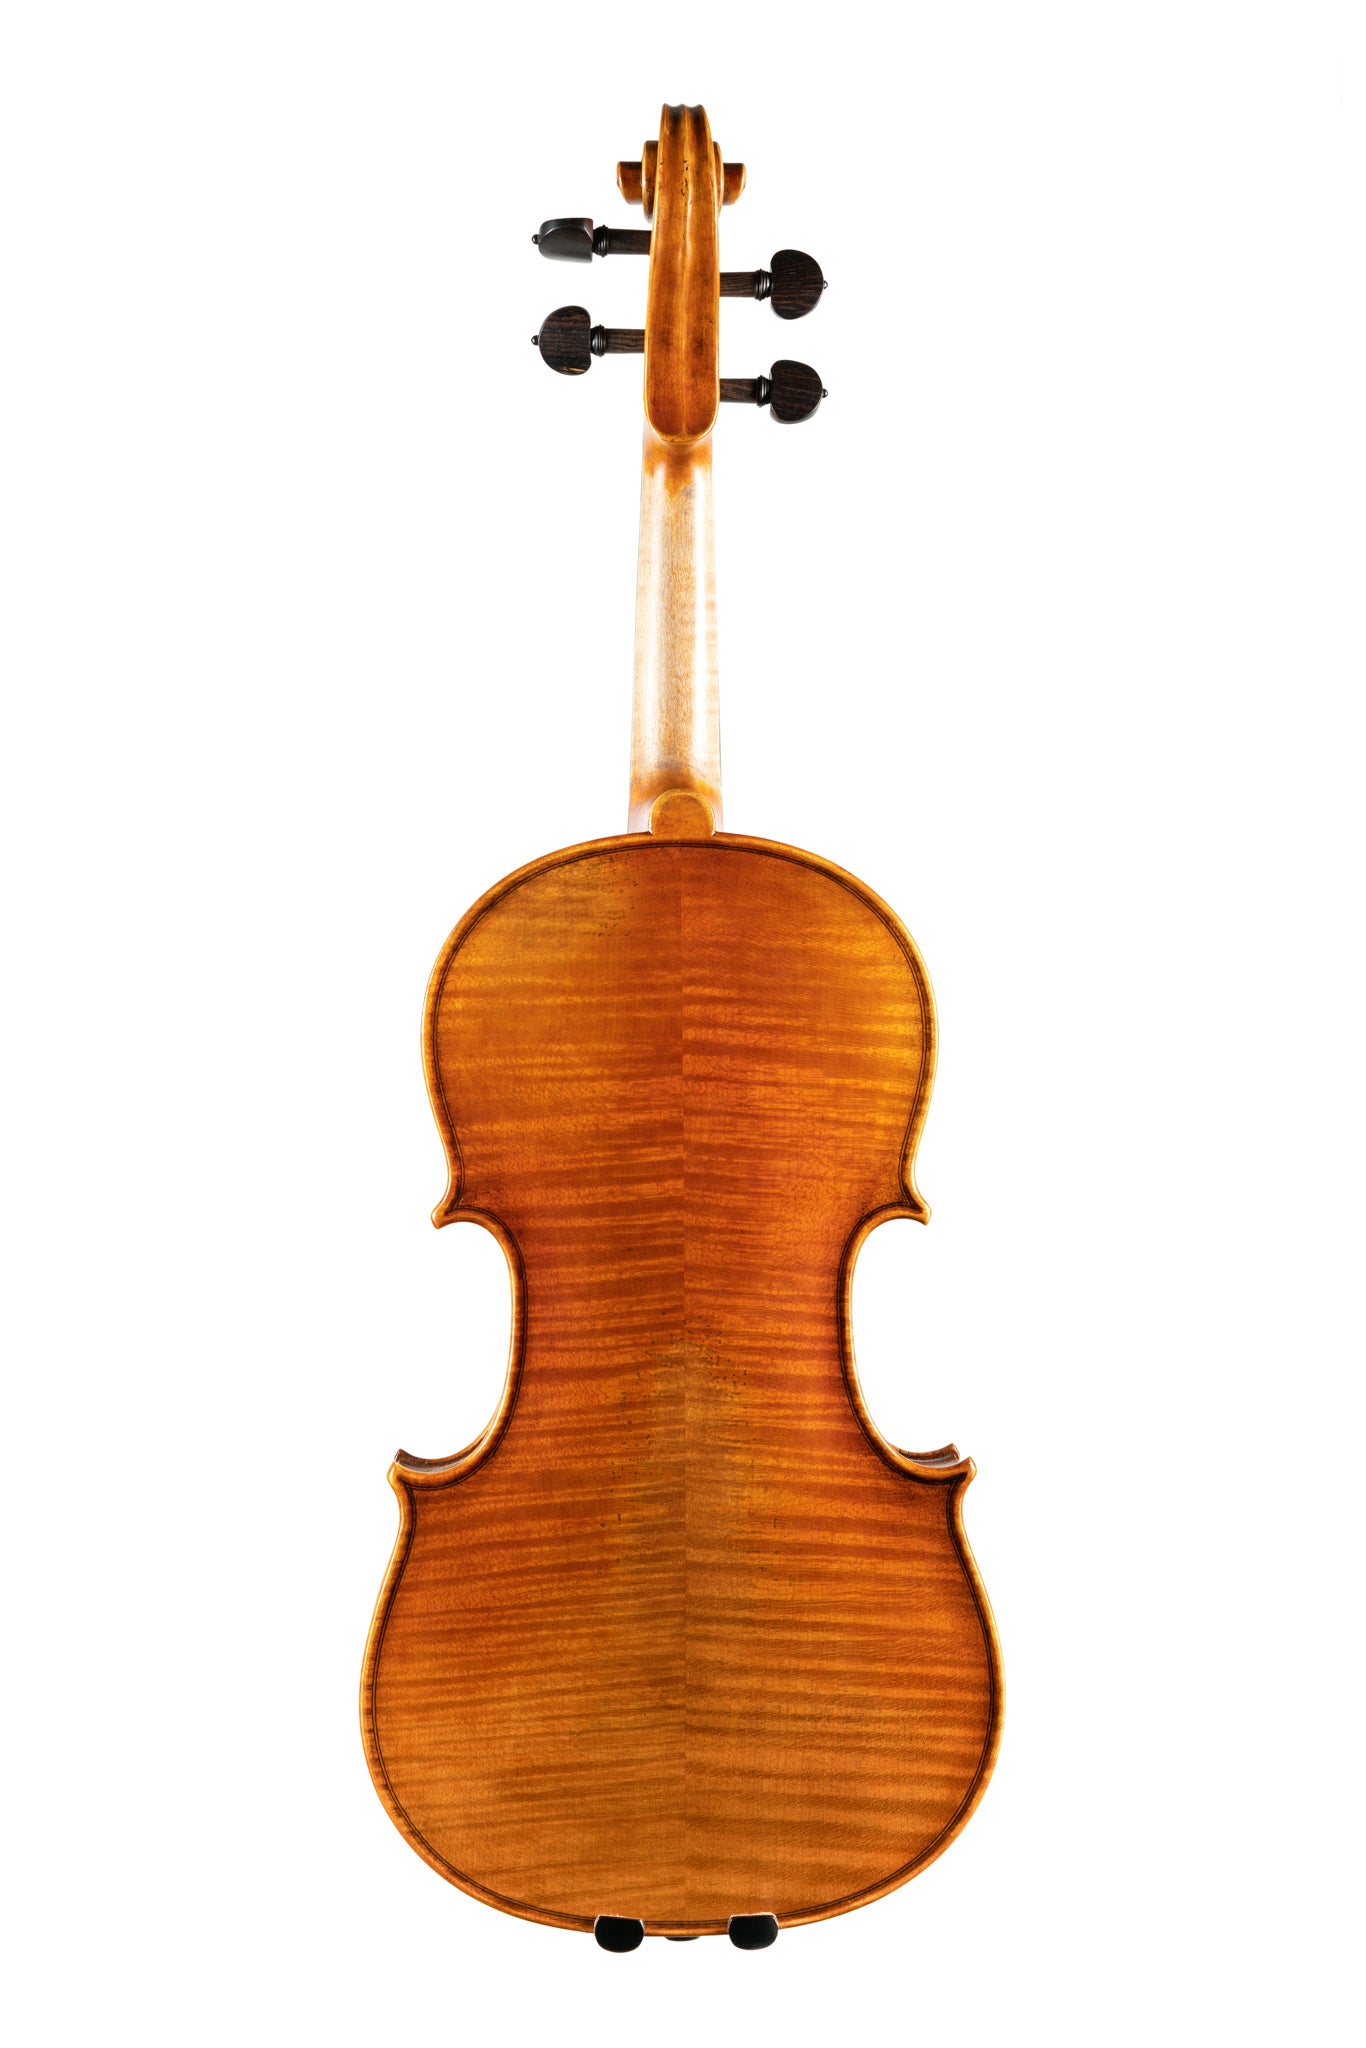 BL-500 Violin